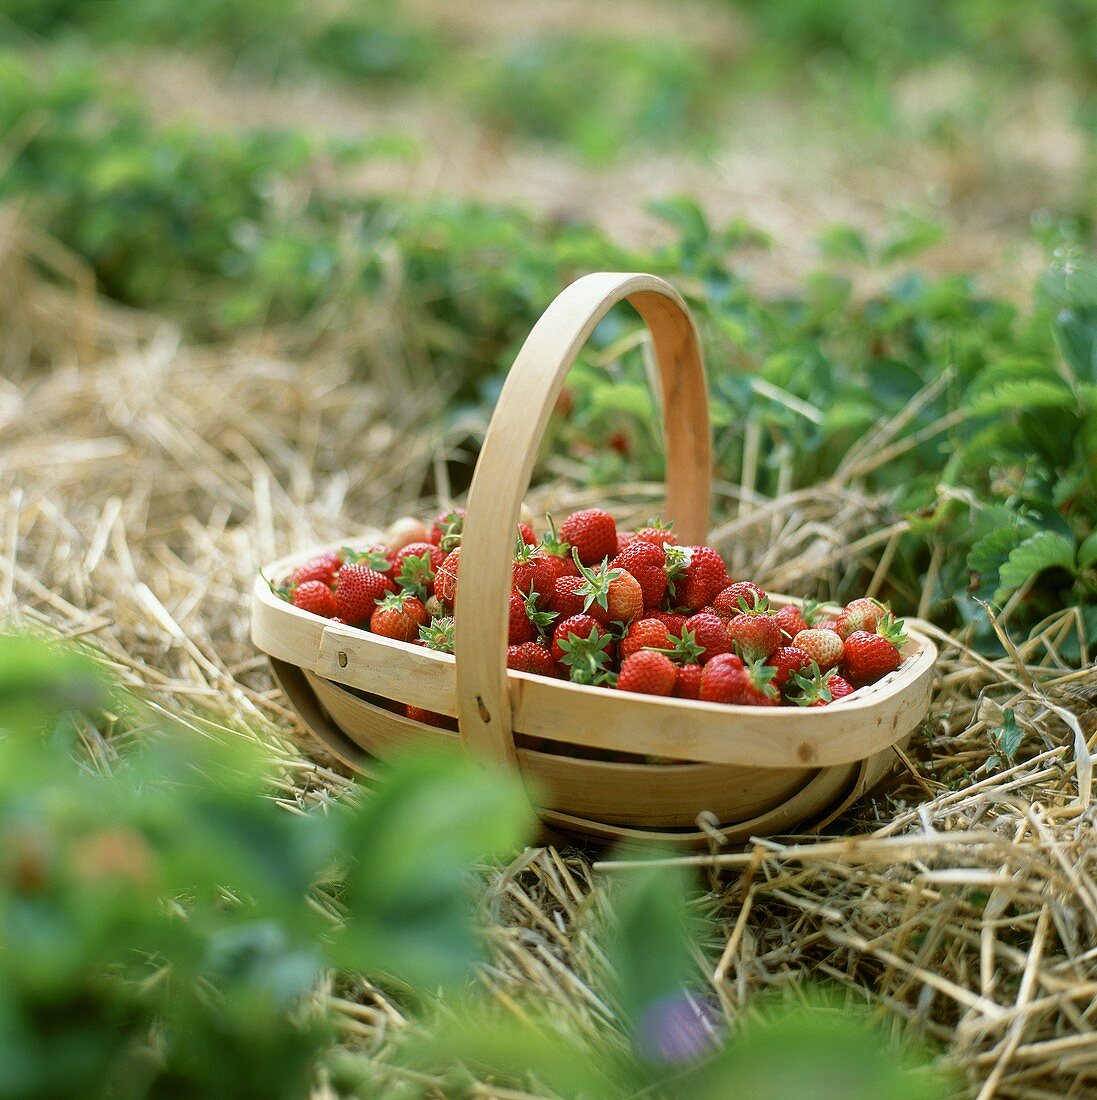 Basket of freshly picked strawberries in strawberry field